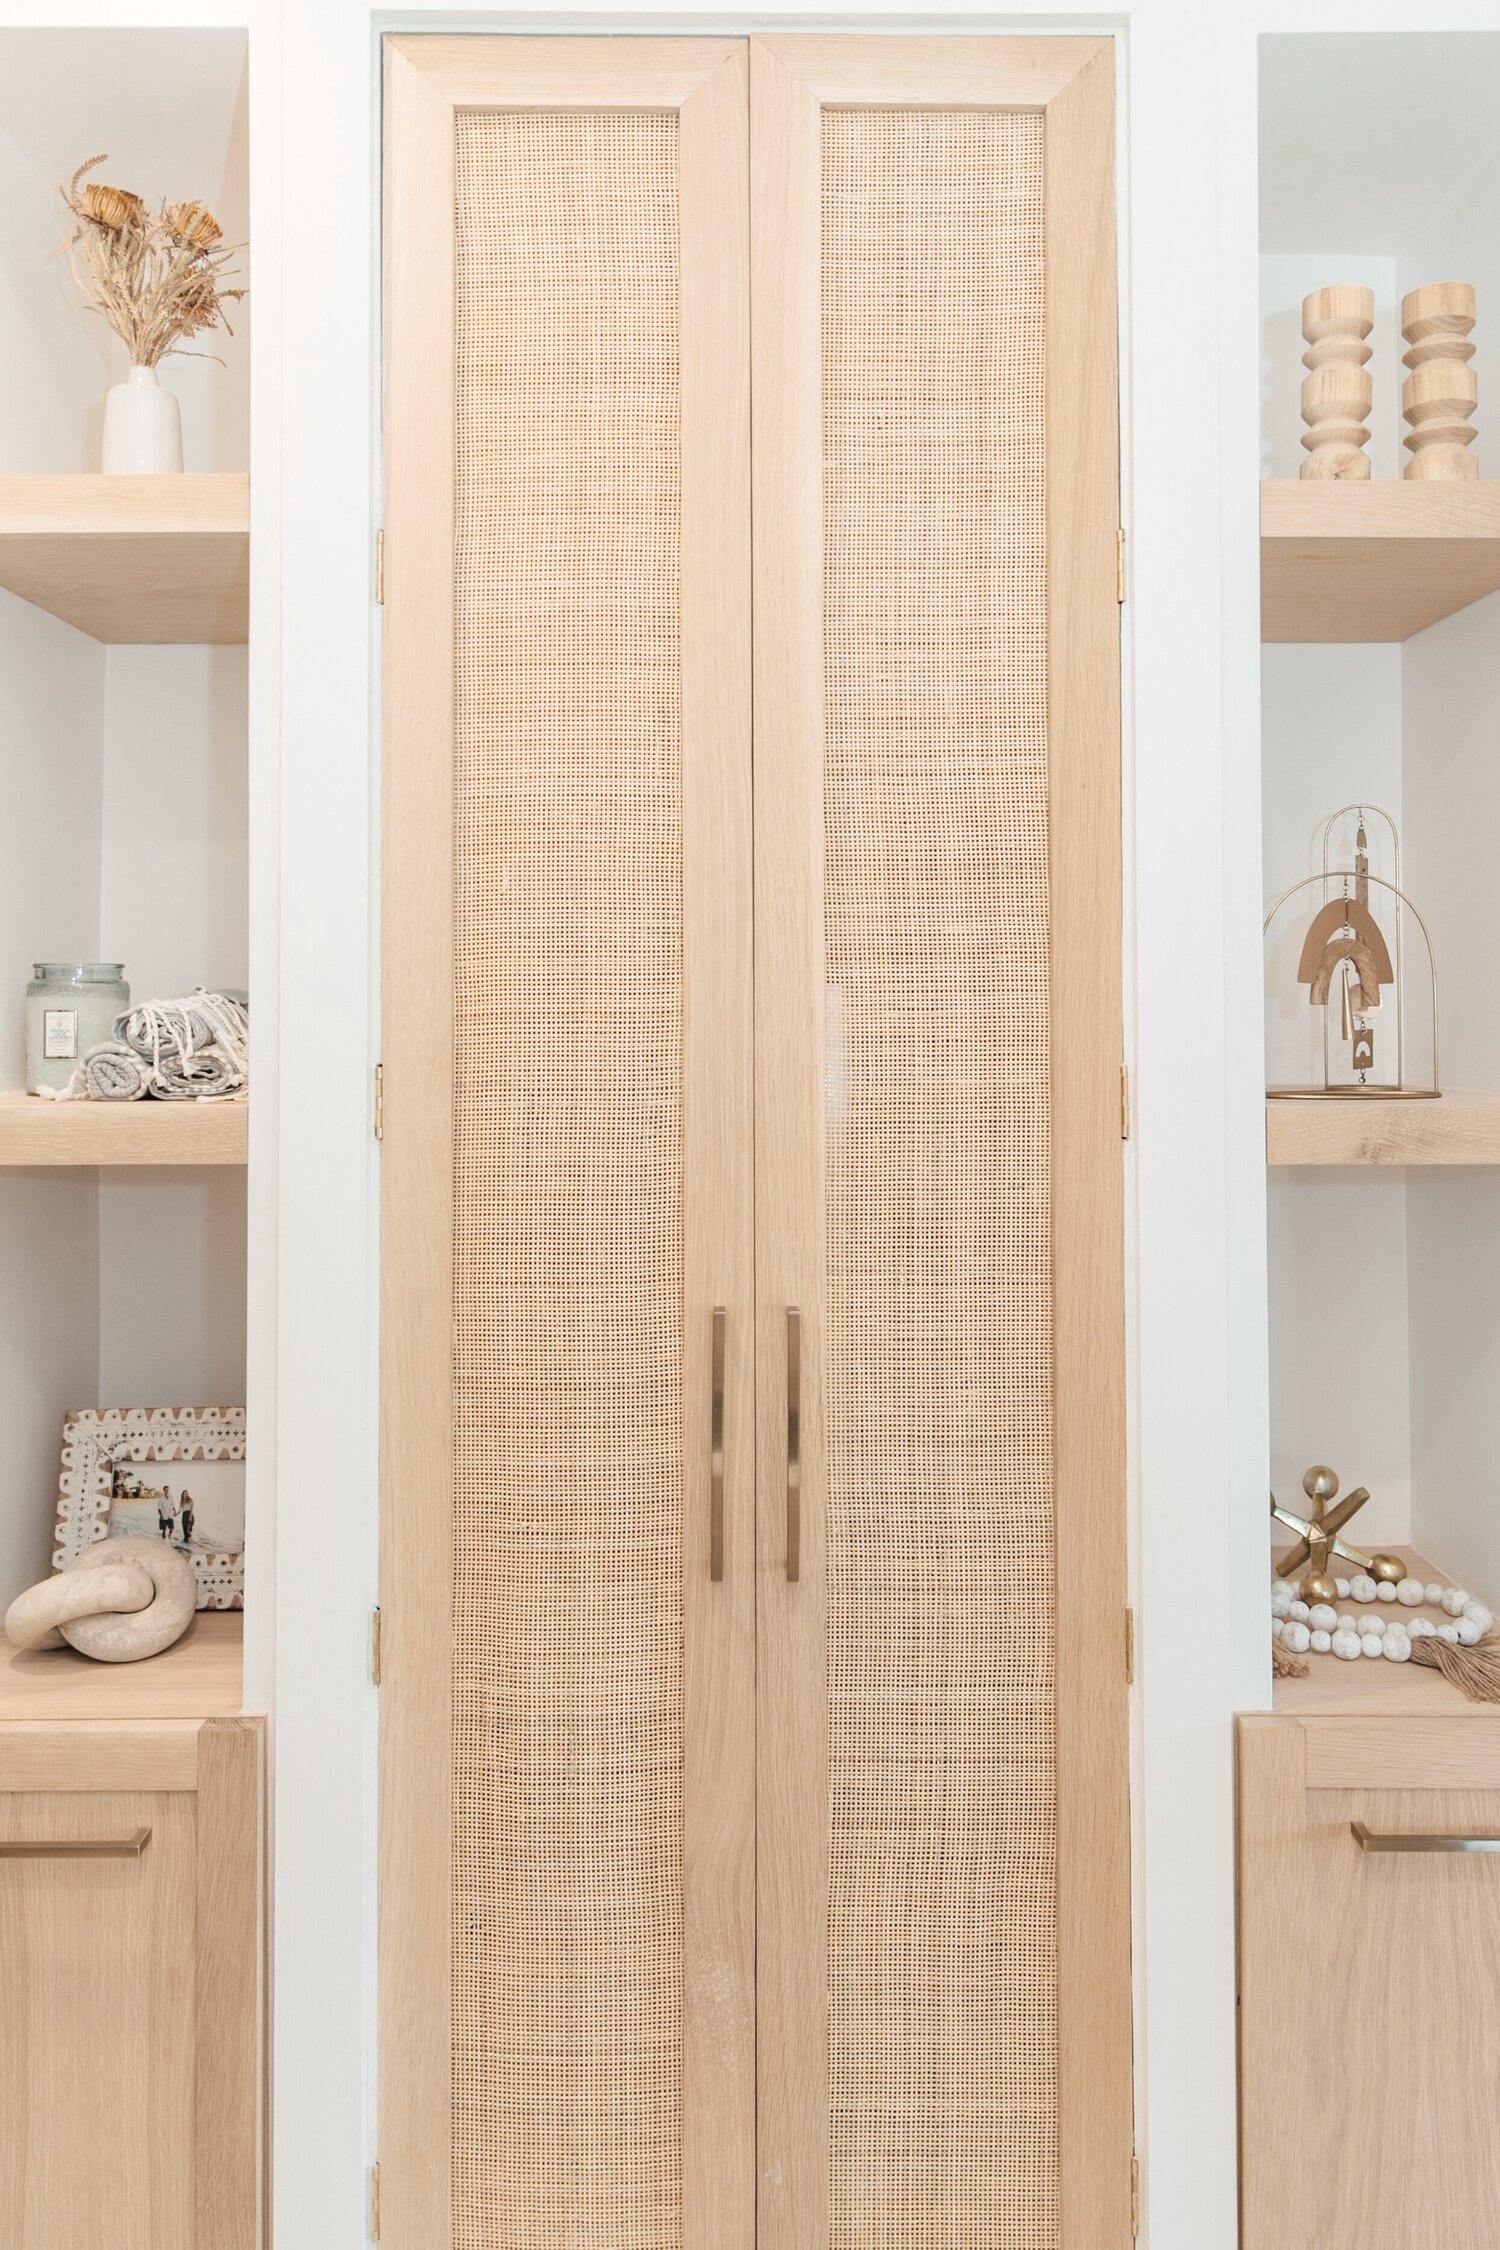 DIY Custom Cane Closet Doors — Hawaii Interior Designer